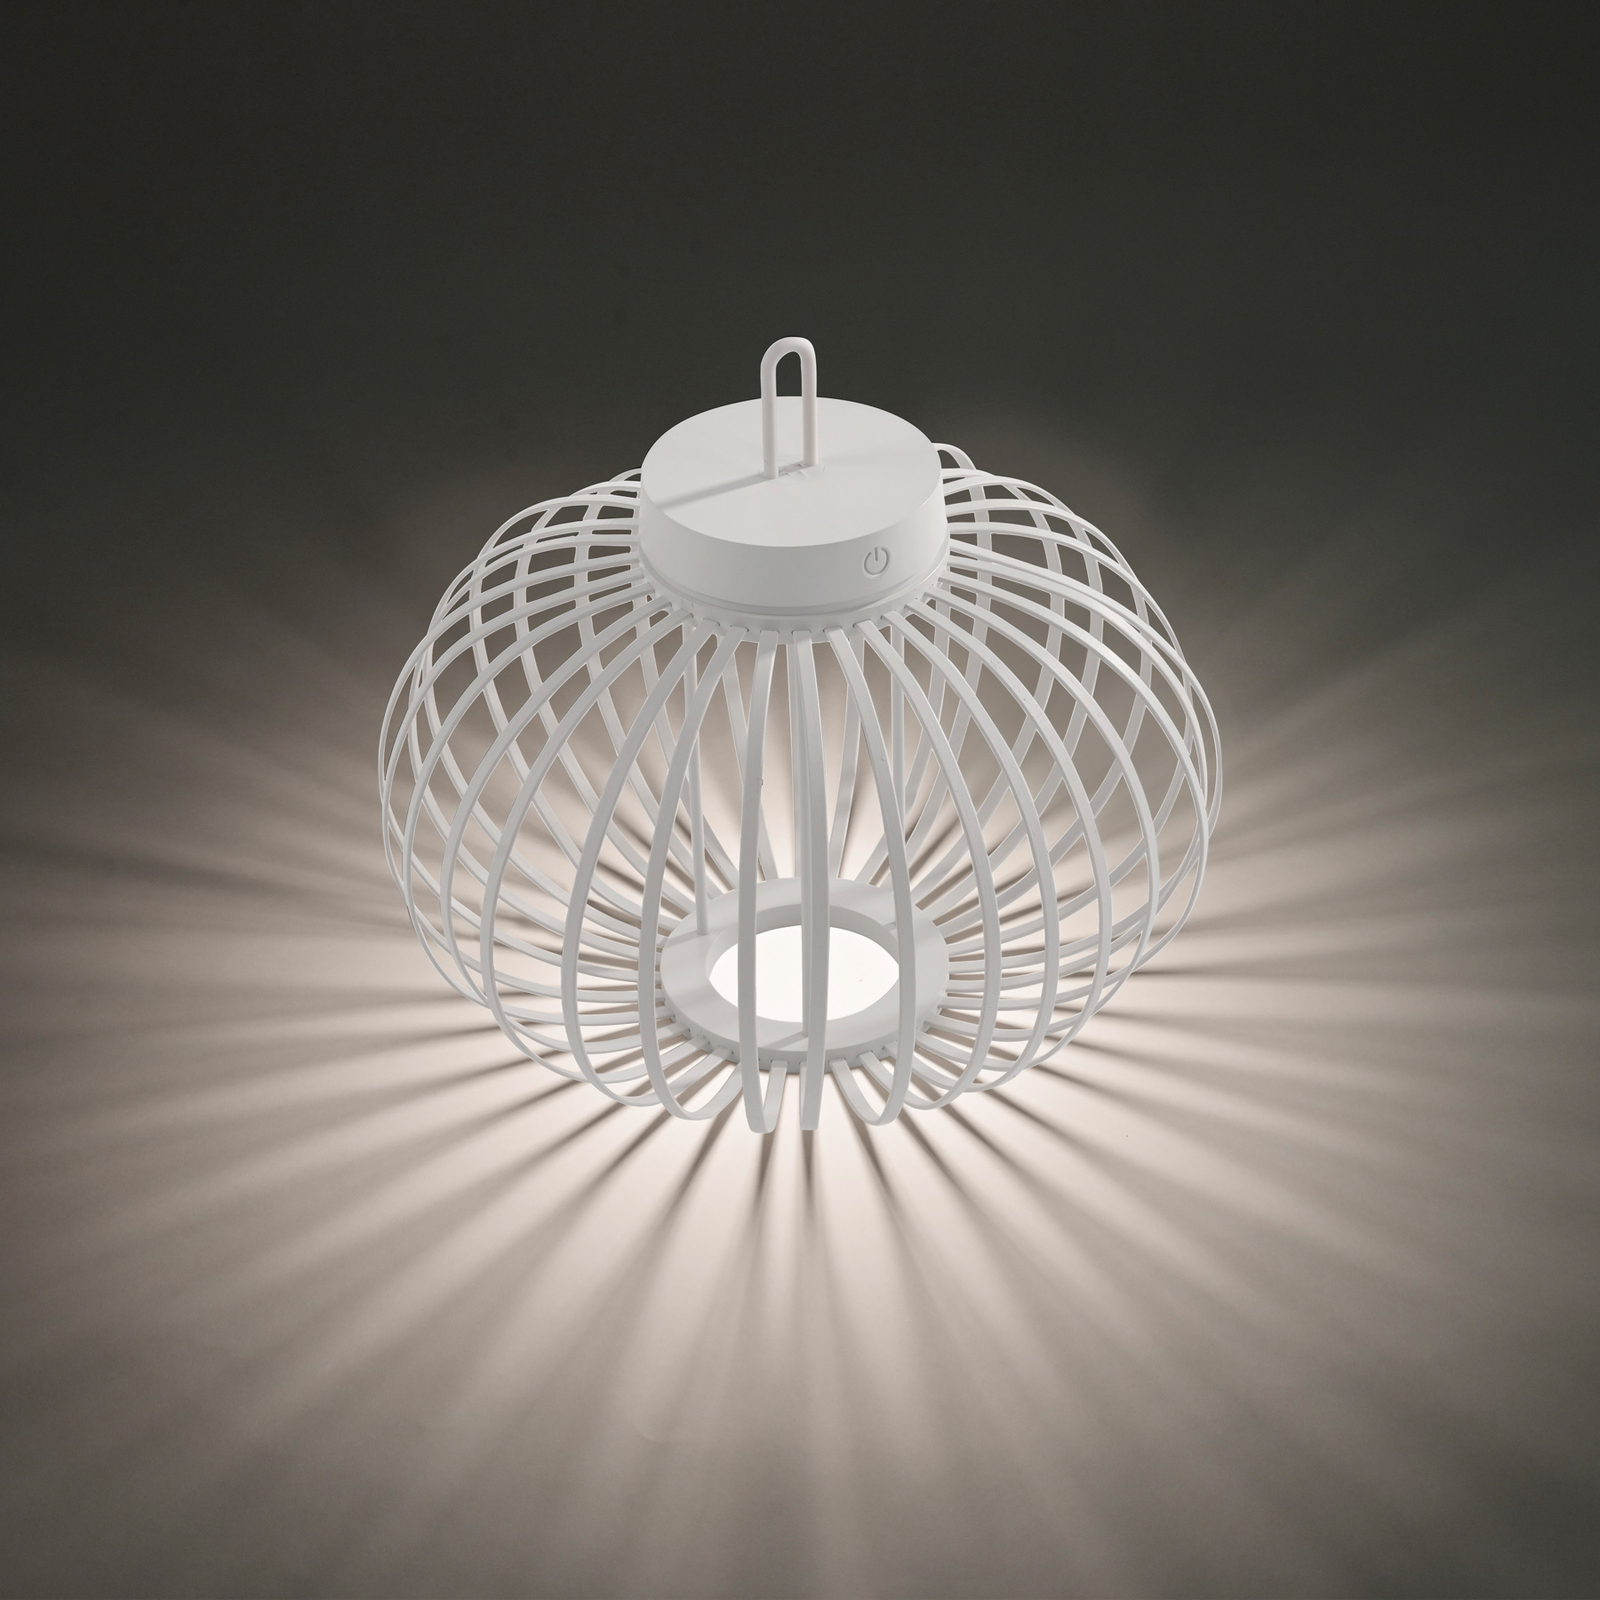 JUST LIGHT. Akuba LED tafellamp, wit, 33 cm, bamboe